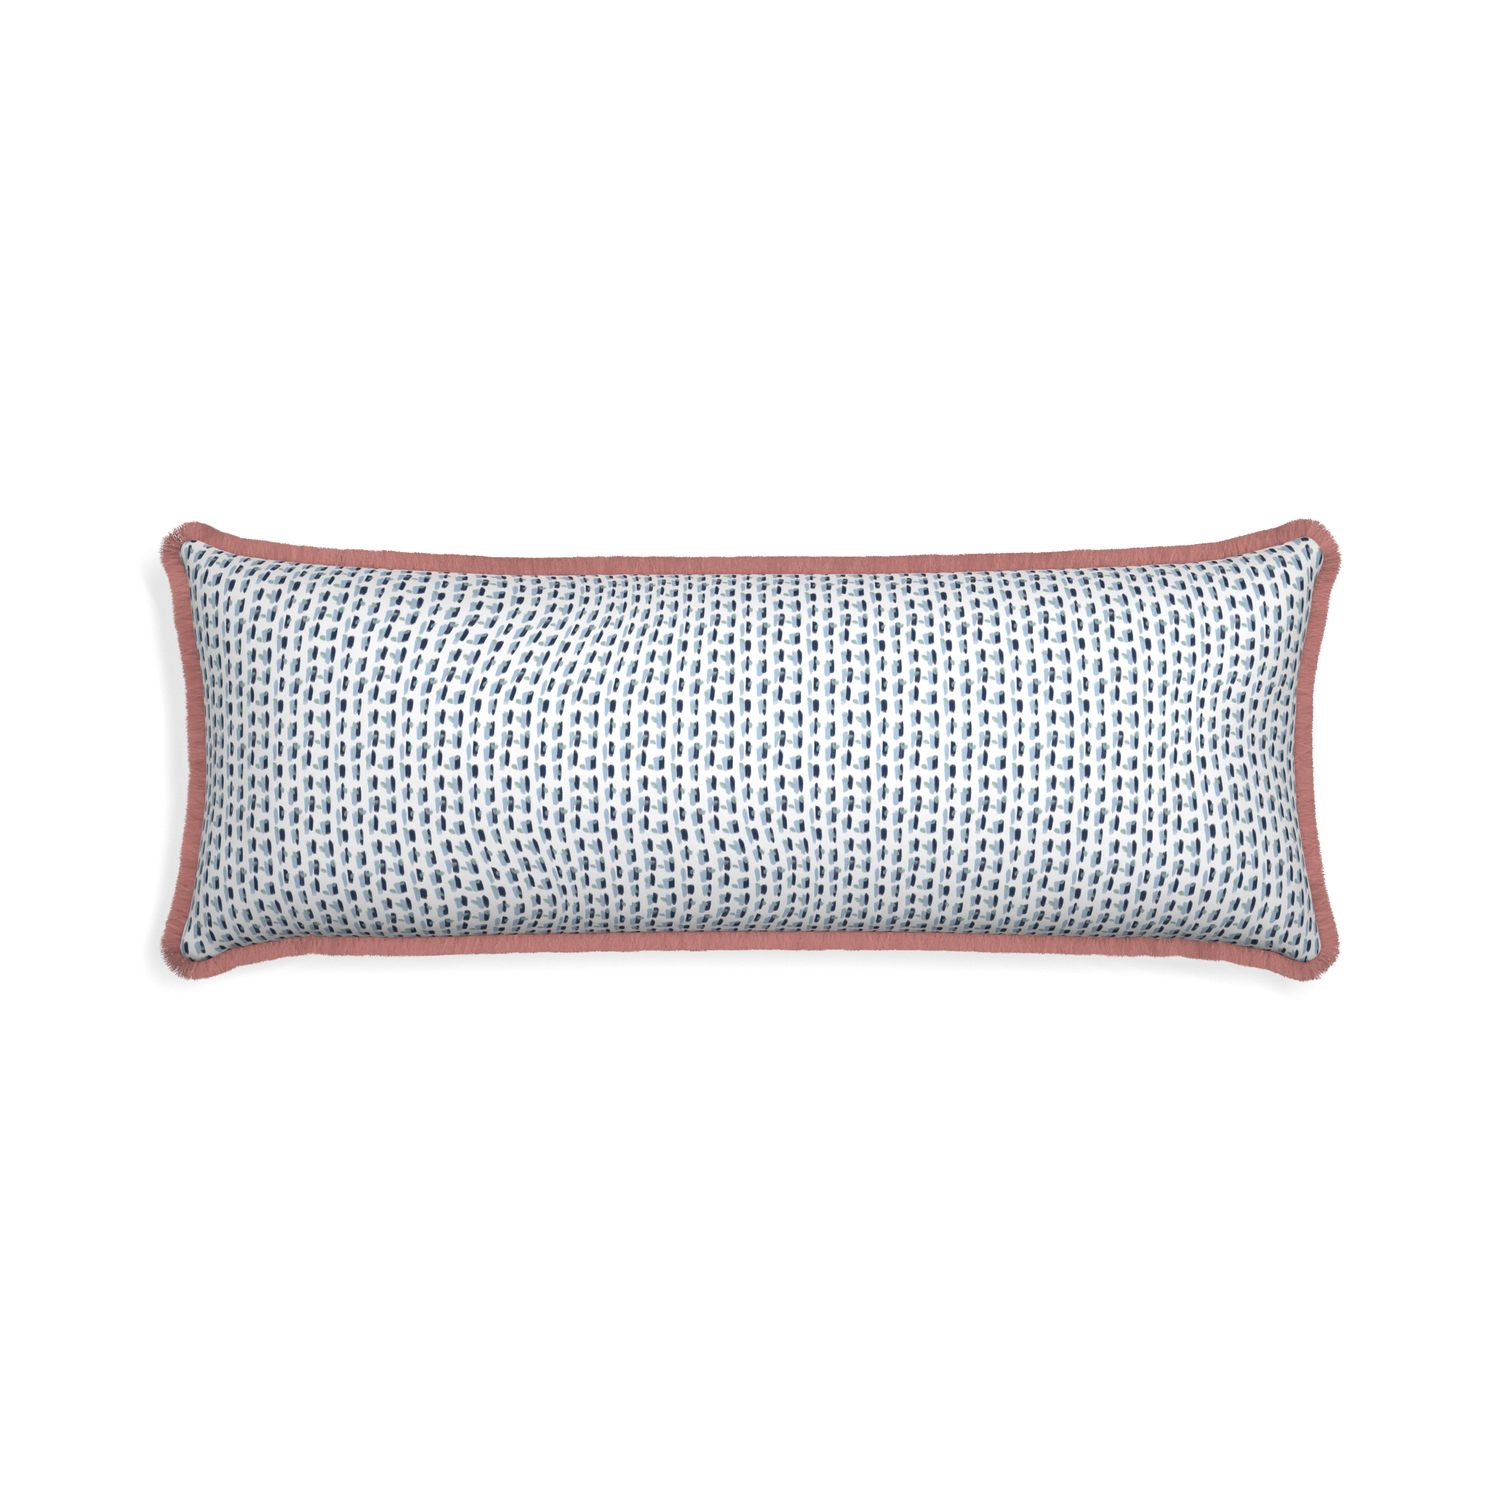 Xl-lumbar poppy blue custom pillow with d fringe on white background